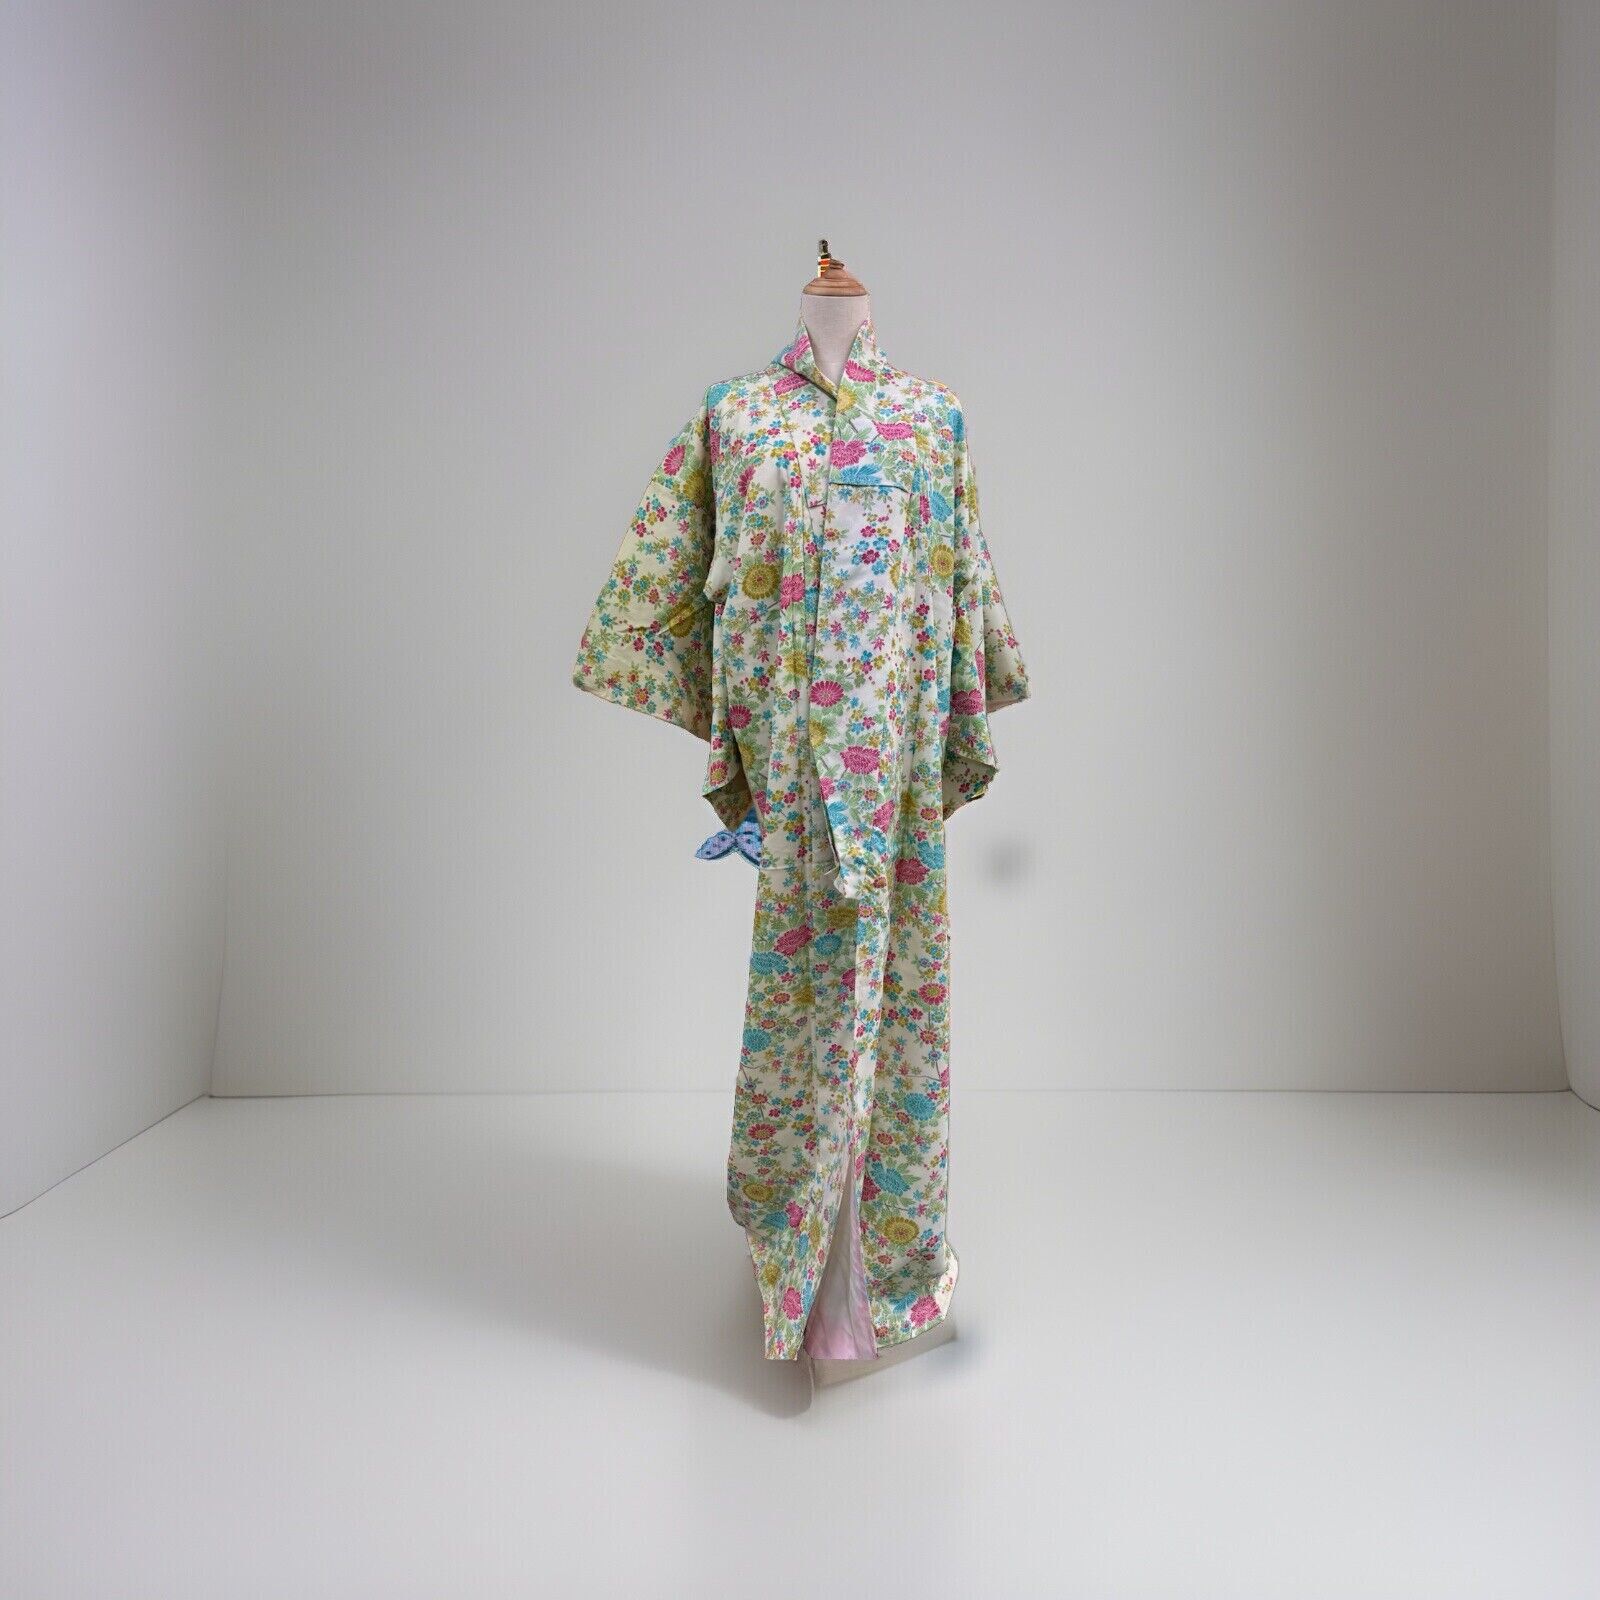 KOMON SILK KIMONO Japanese Antique Vintage Dress cardigan authentic colorful